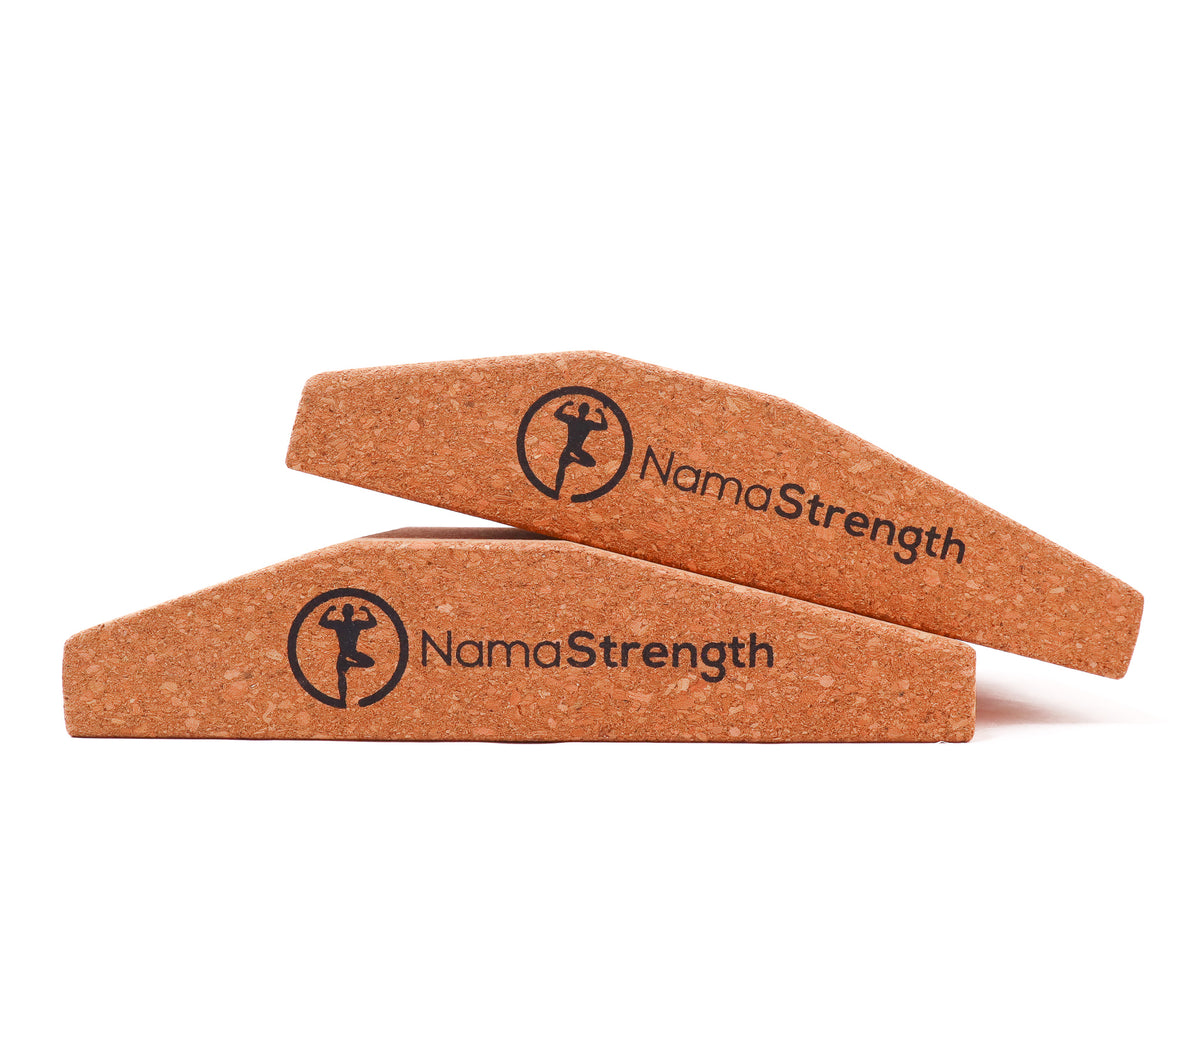  NamaStrength Yoga Wedge for Wrist, Wrist Support Yoga Cork Yoga  Wedge Block, Non-Slip Yoga Wrist Support, Set of 2 : Sports & Outdoors